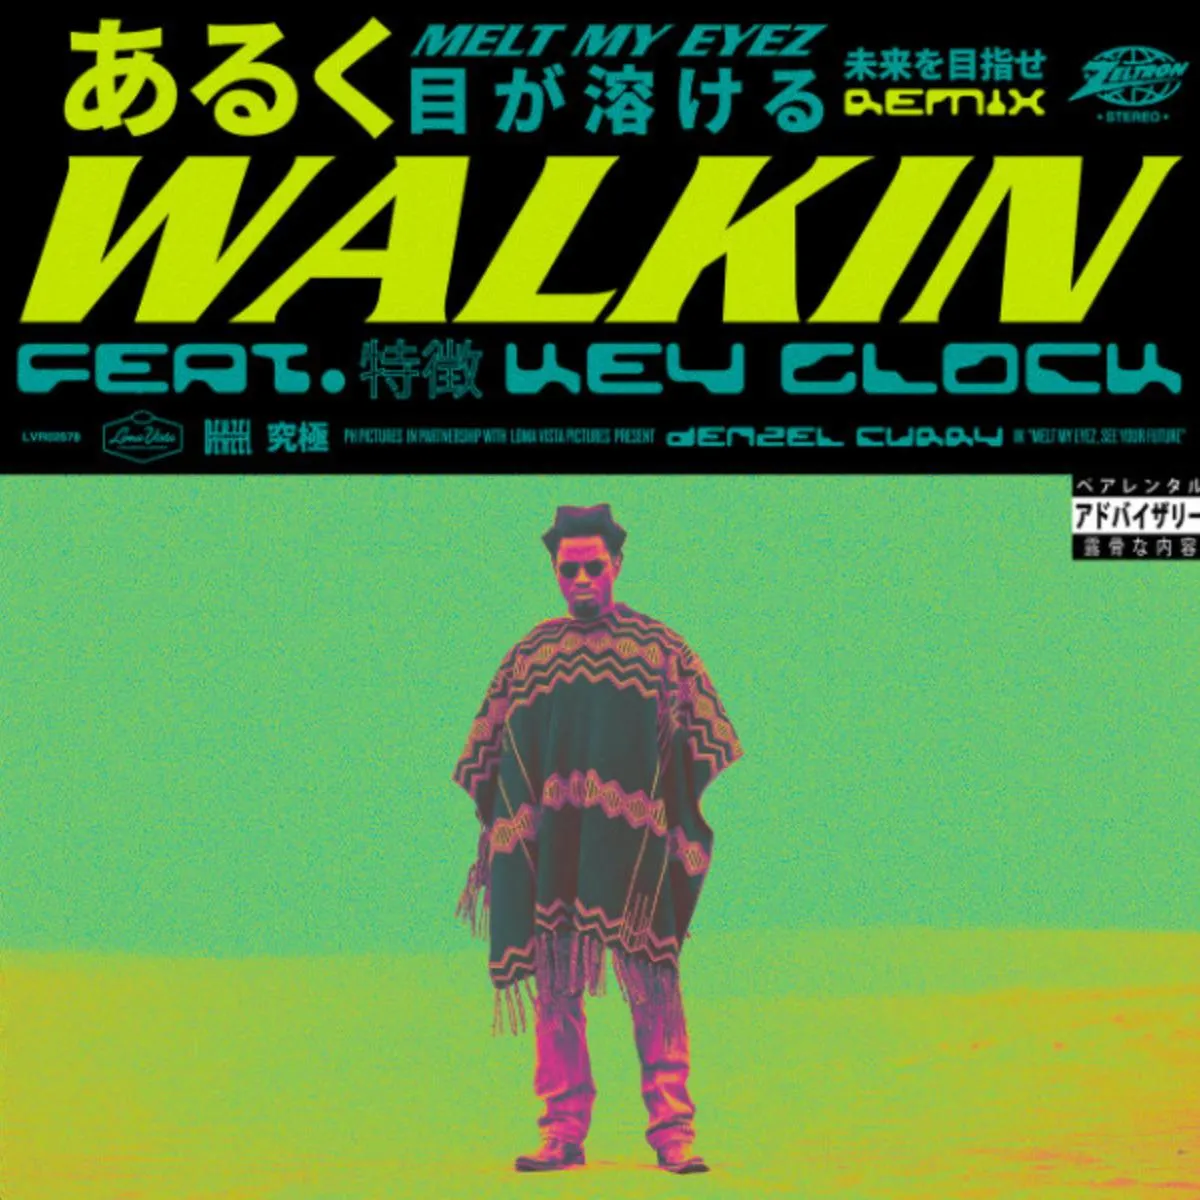 Key Glock staat Denzel Curry bij op Walkin Remix